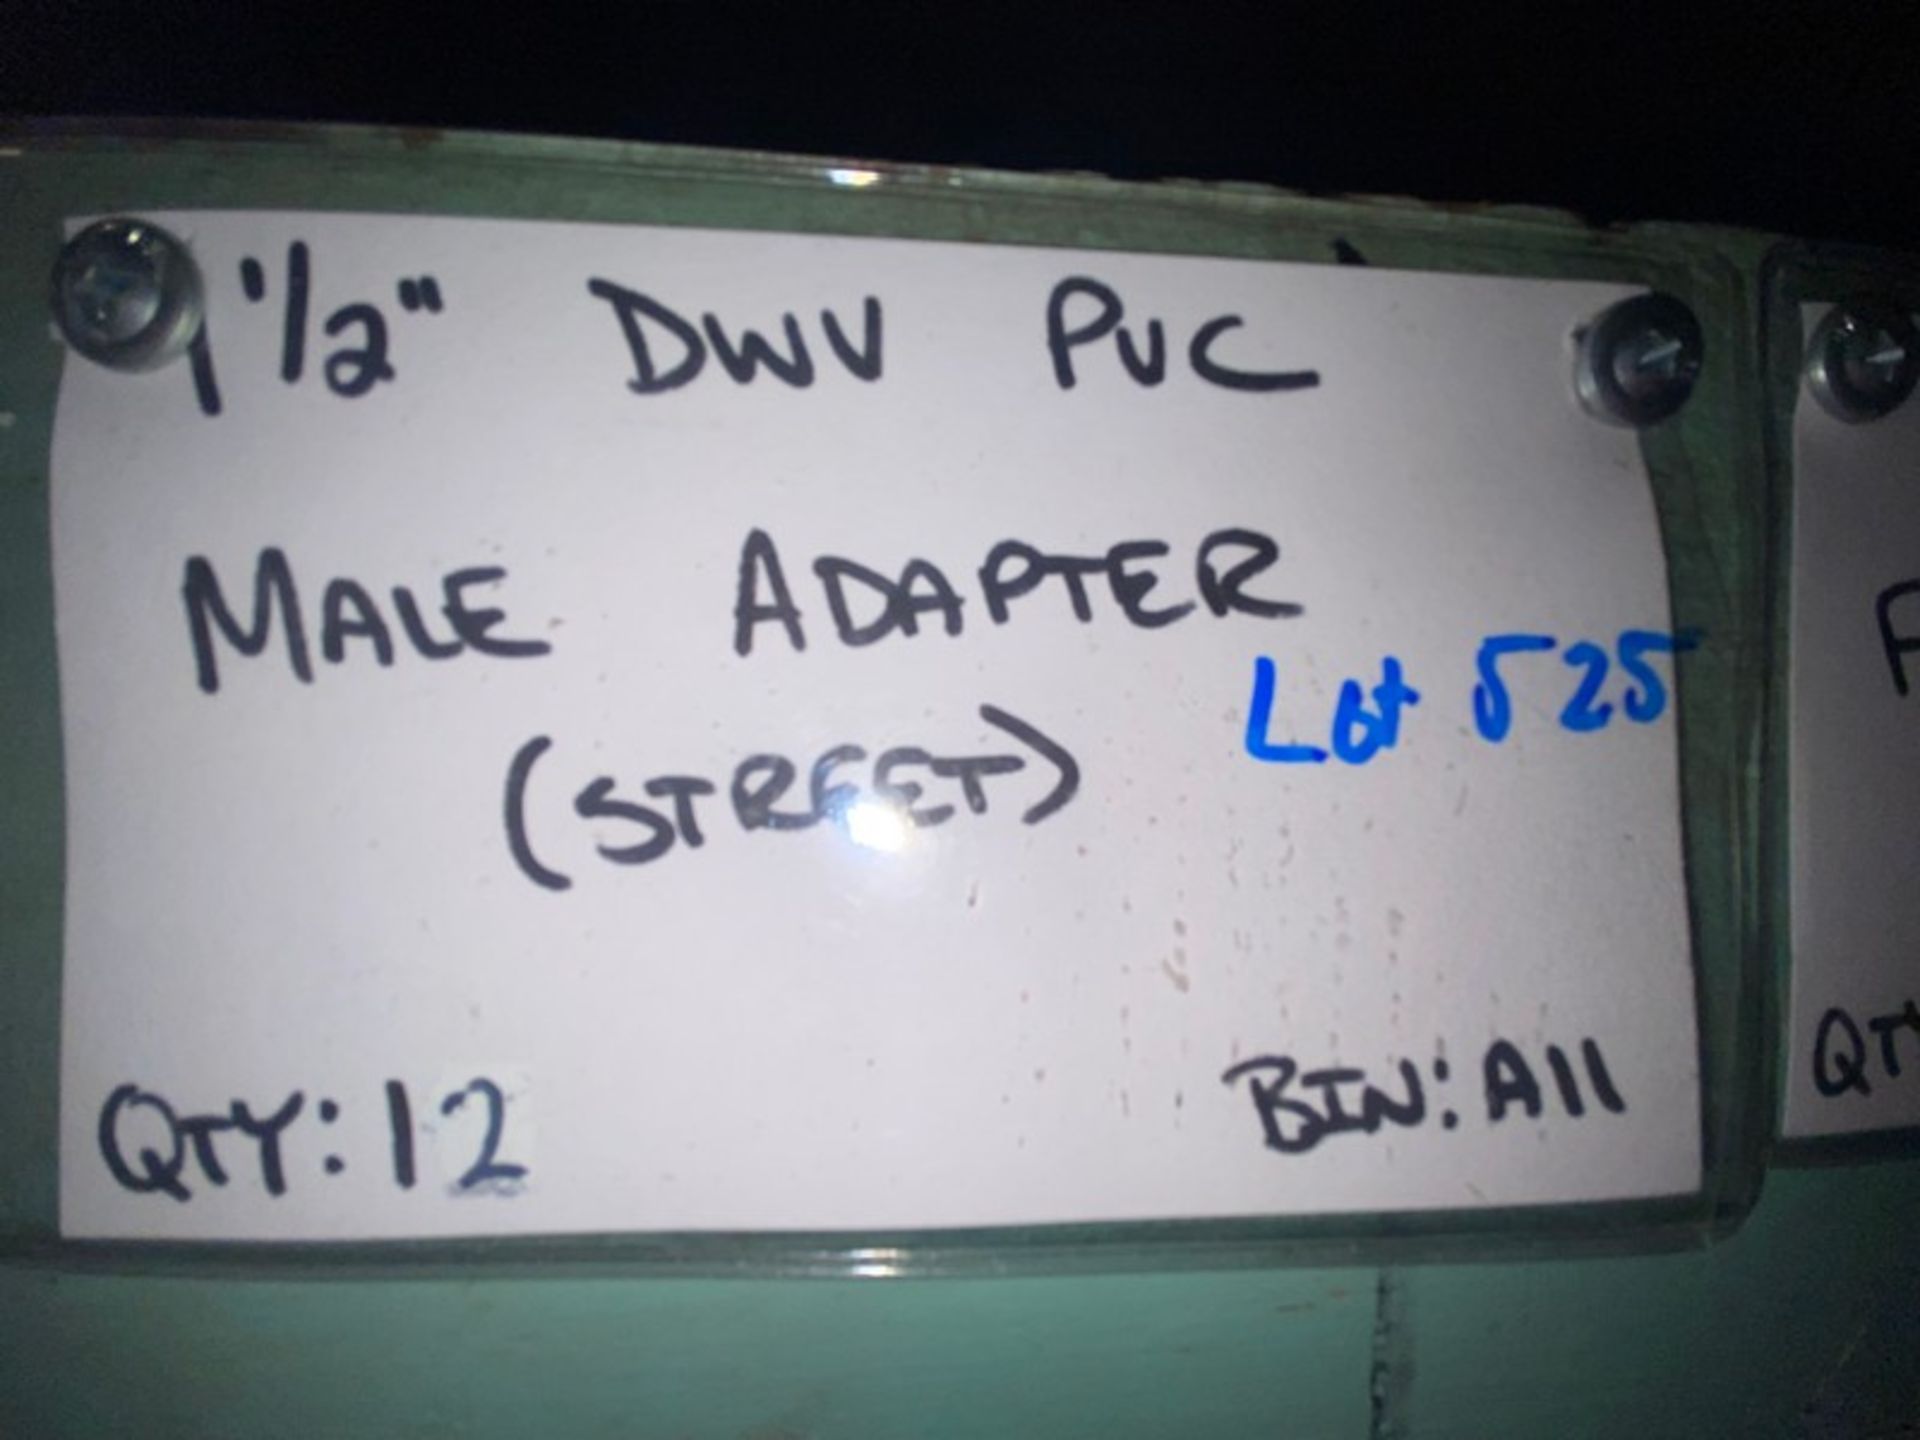 (14) 1 1/2” DWV PVC Male Adapter (STREET) (Bin:A11) (LOCATED IN MONROEVILLE, PA) - Bild 4 aus 4